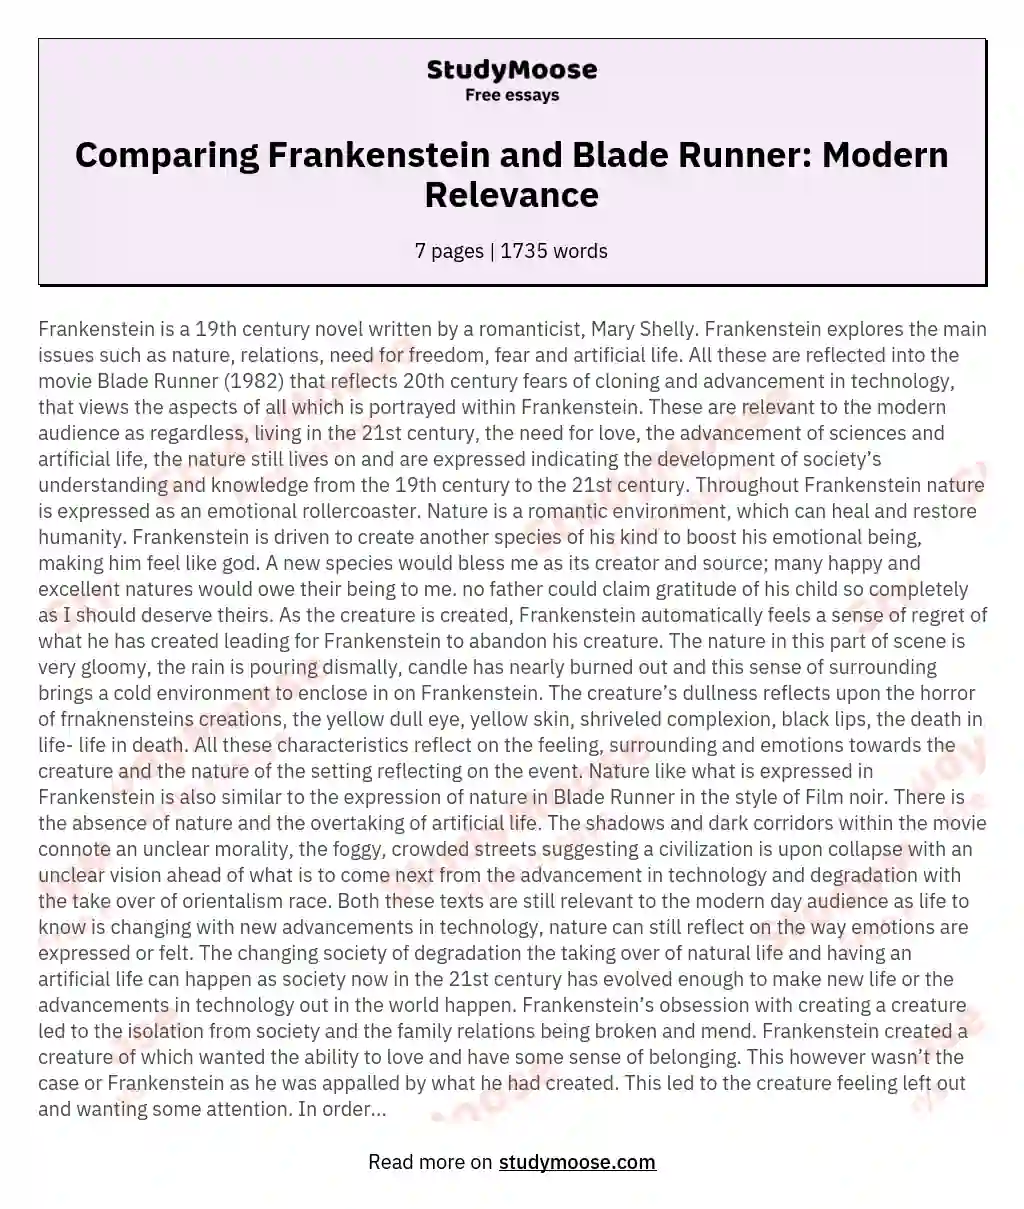 Comparing Frankenstein and Blade Runner: Modern Relevance